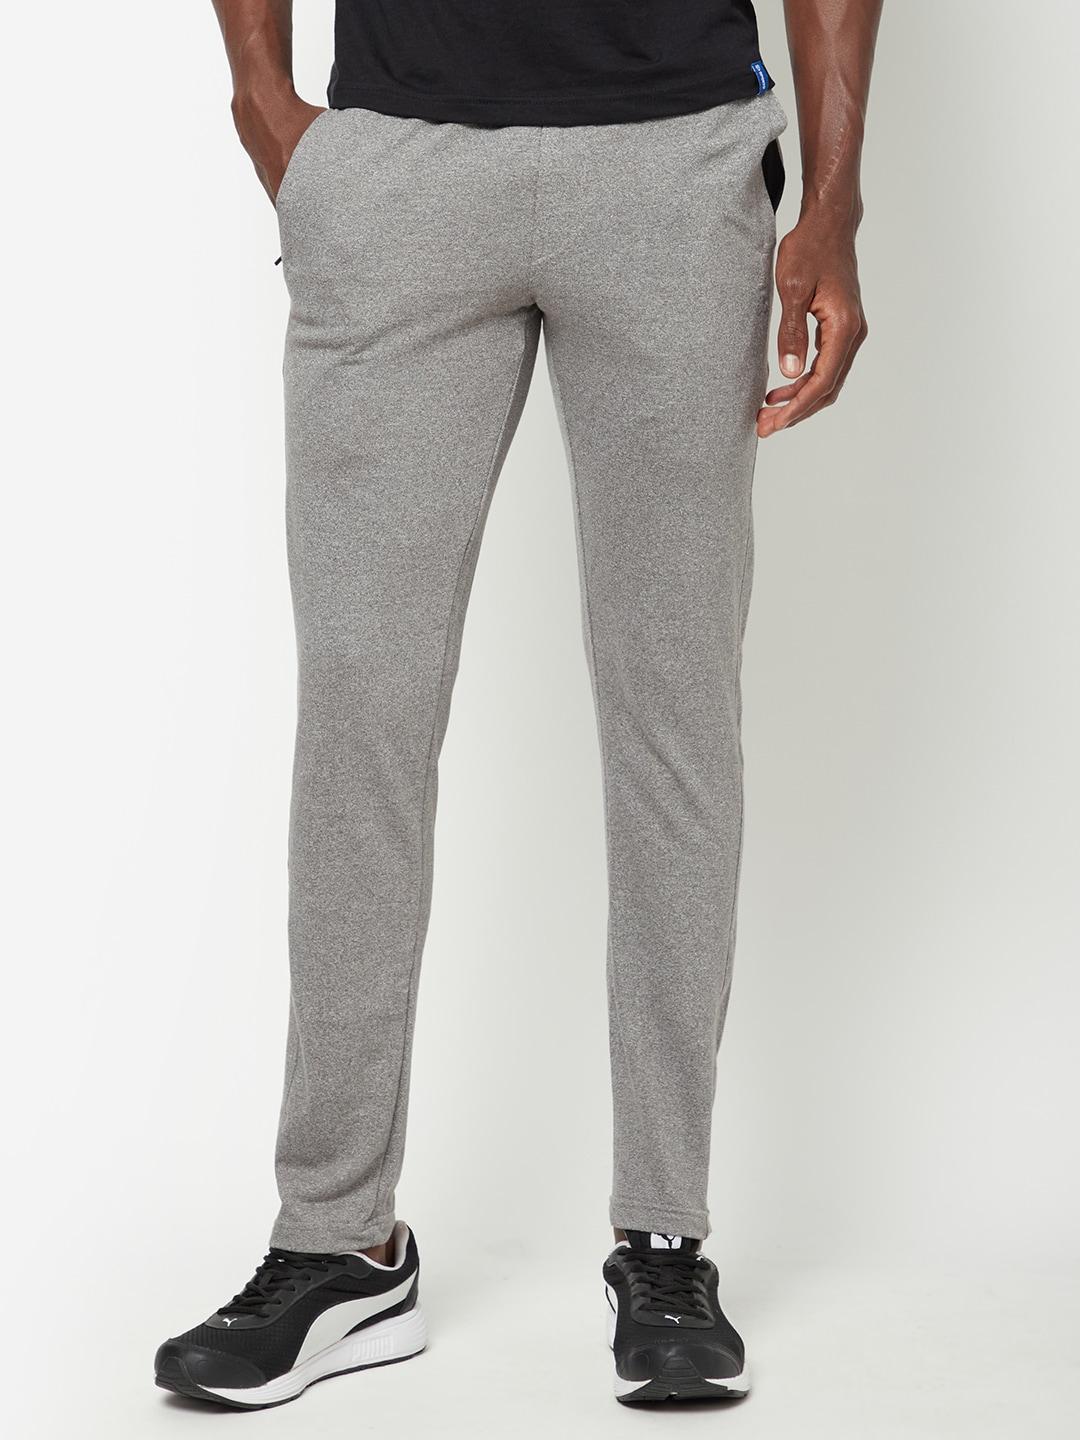 sporto-men-grey-solid-track-pants